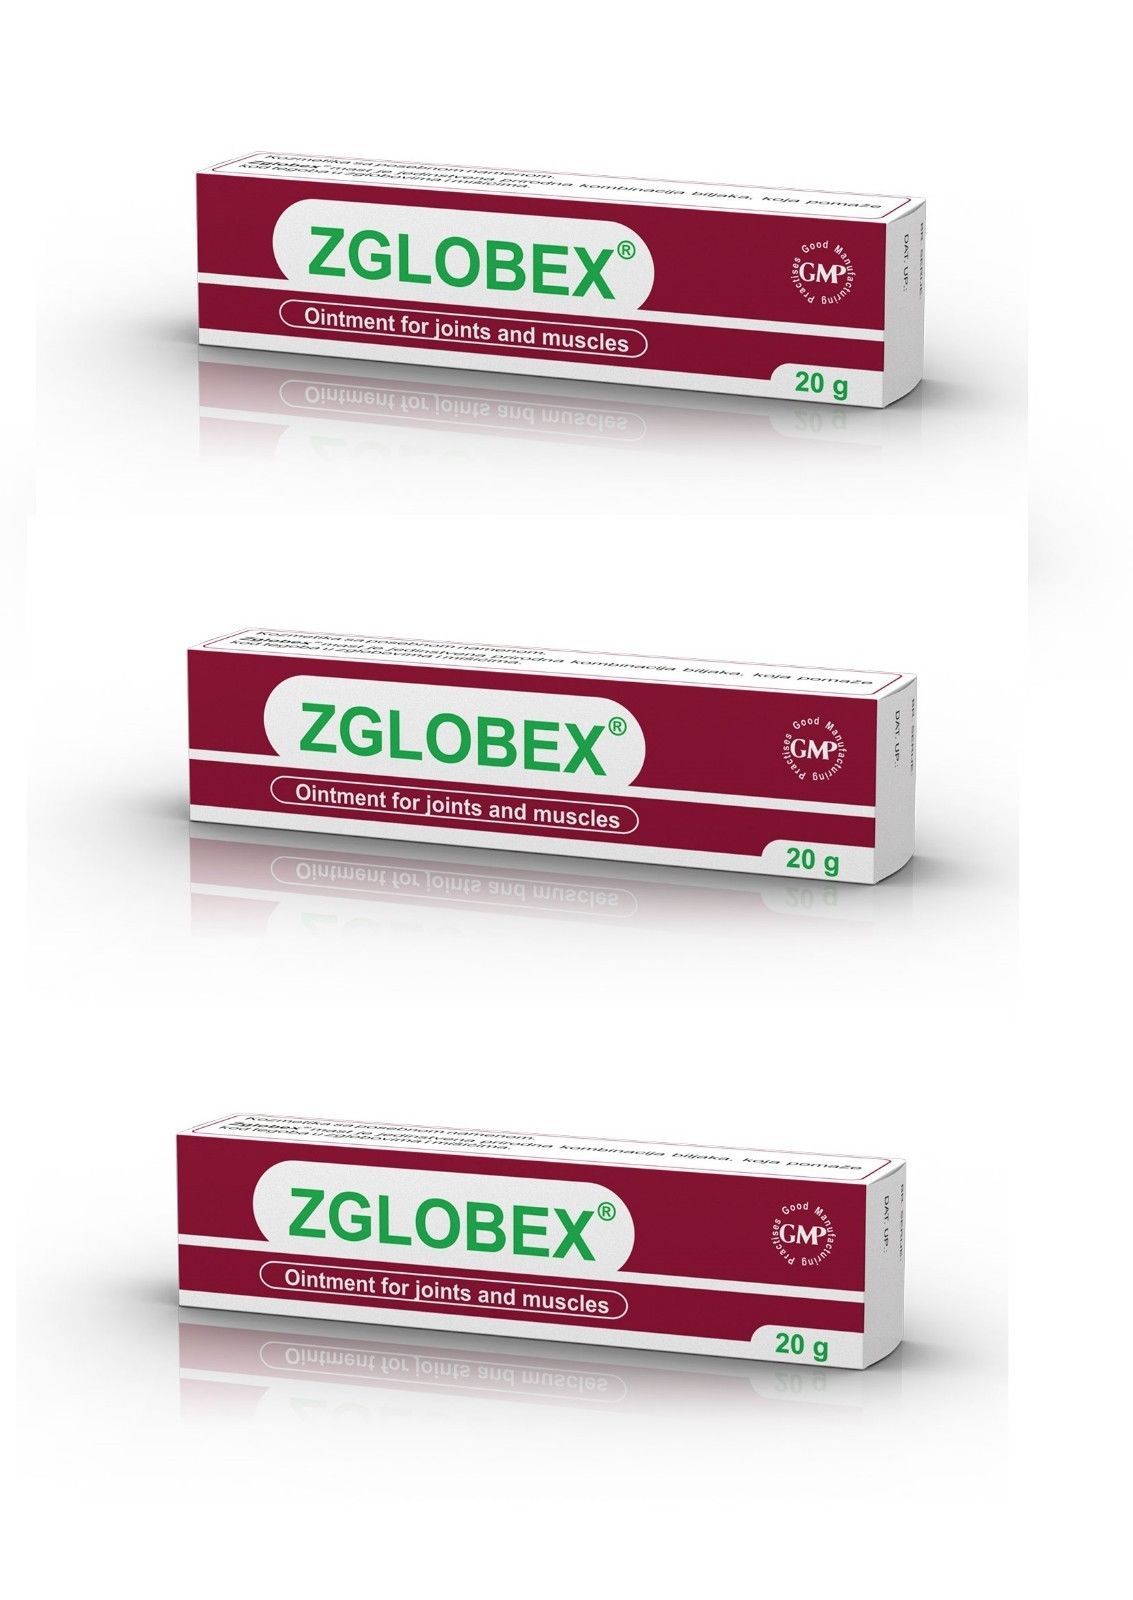 3X Zglobex creme ointment 20g total 60g - $39.59